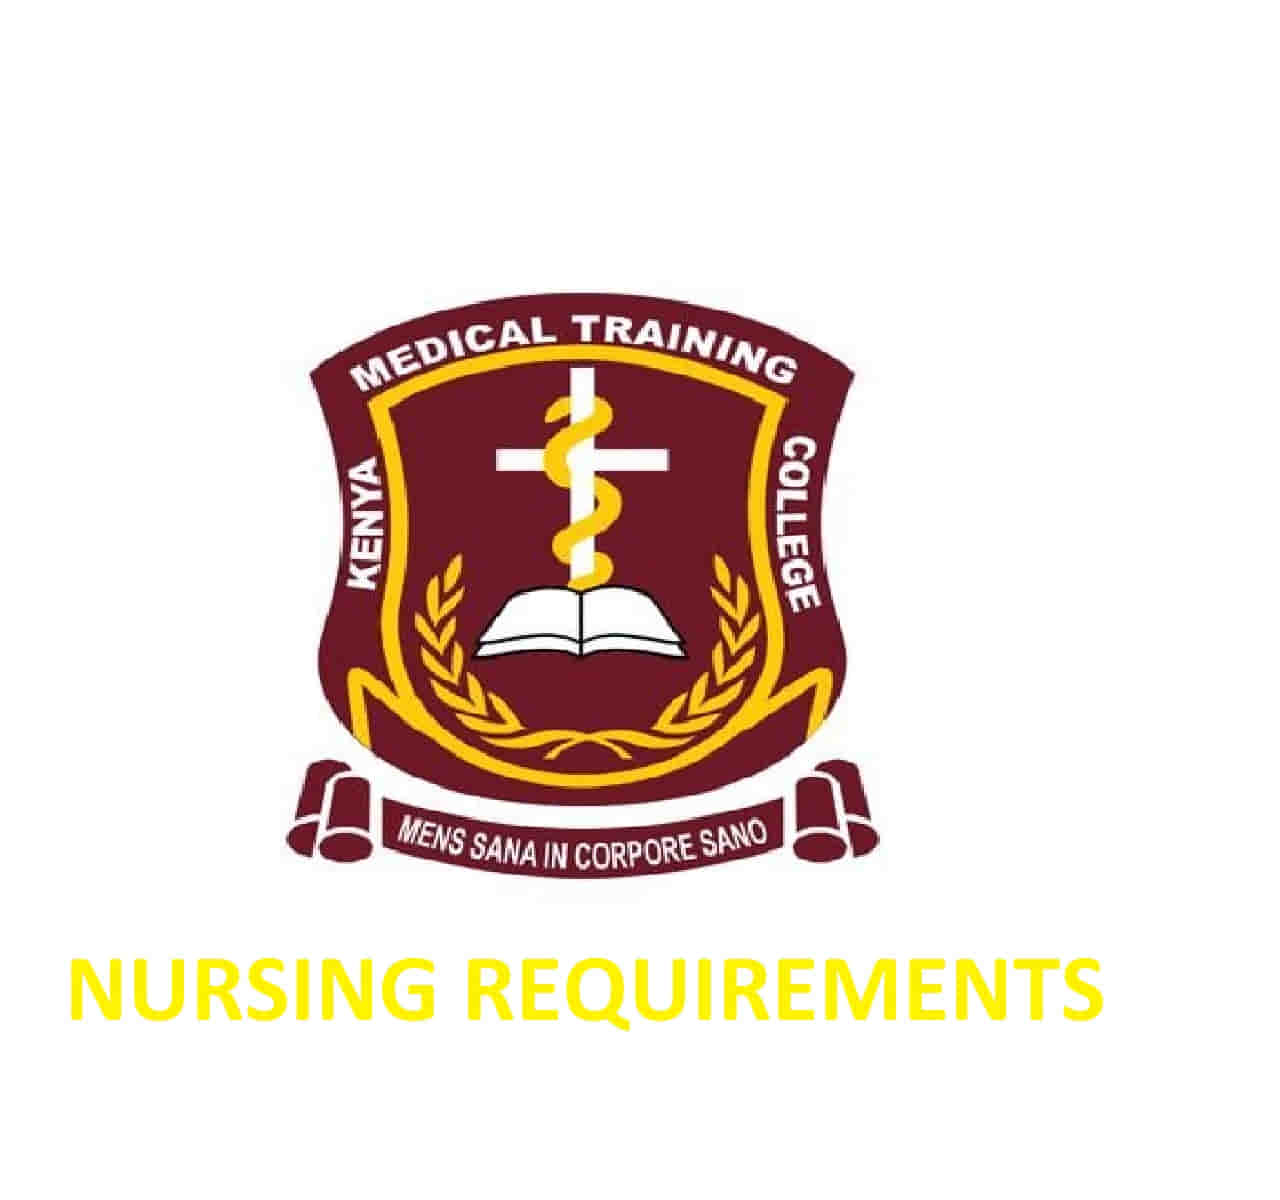 KMTC nursing requirements